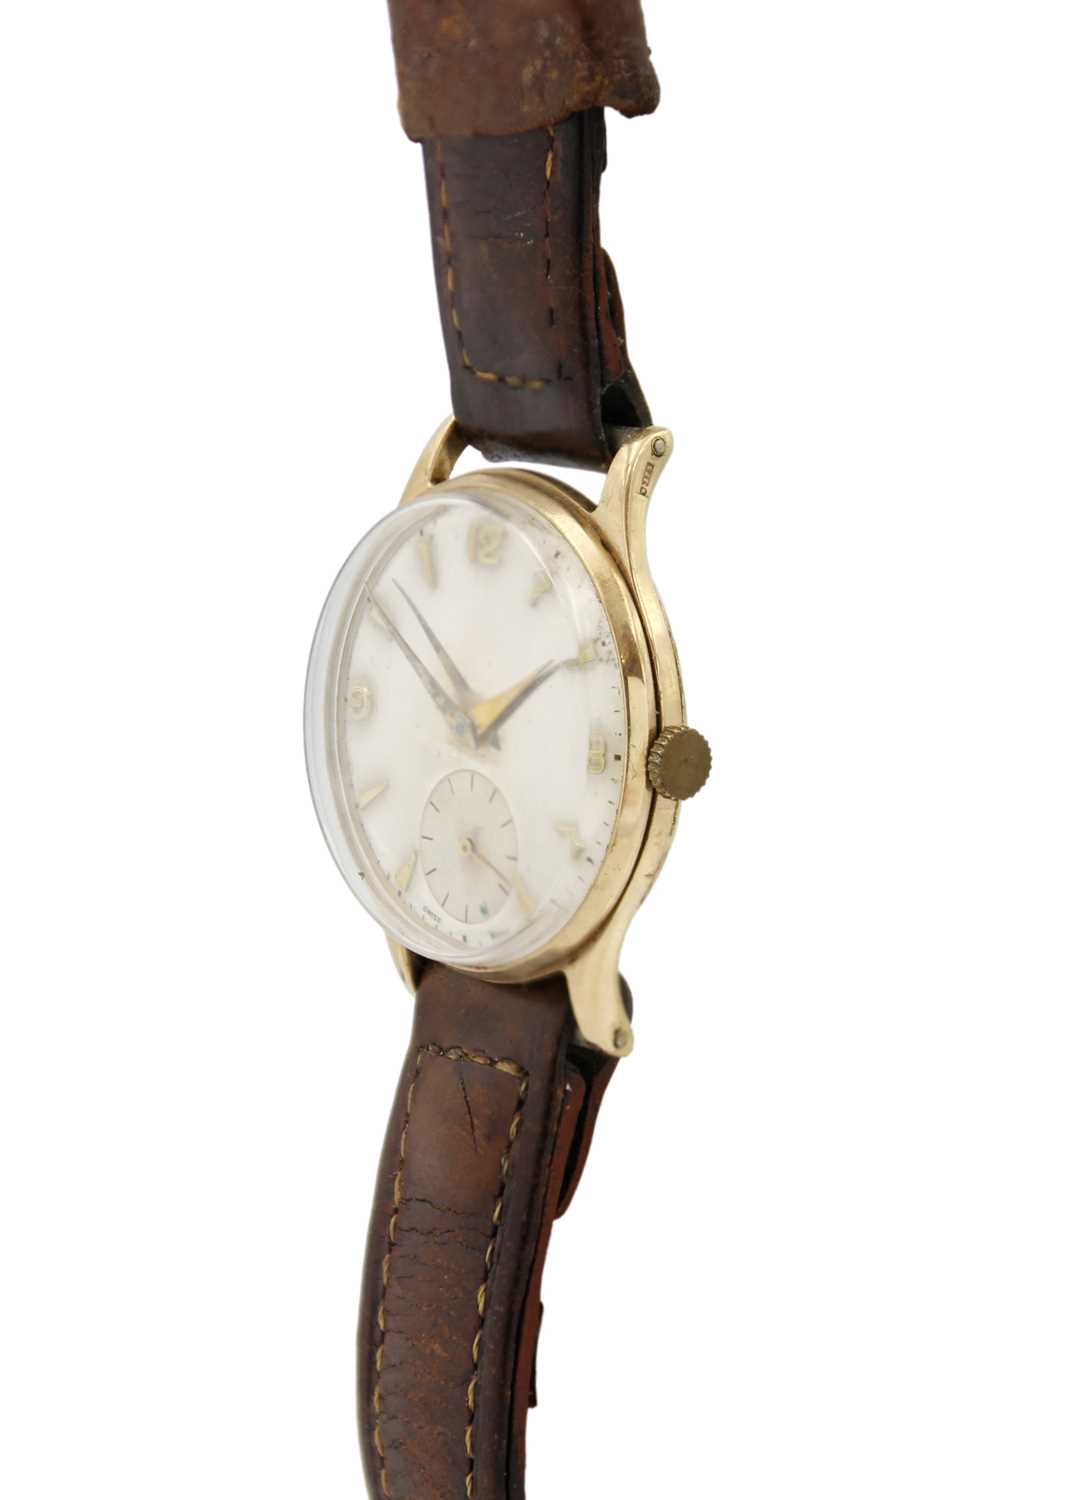 ZENITH - A 9ct cased 1950's manual wind gentleman's wristwatch. - Image 2 of 5